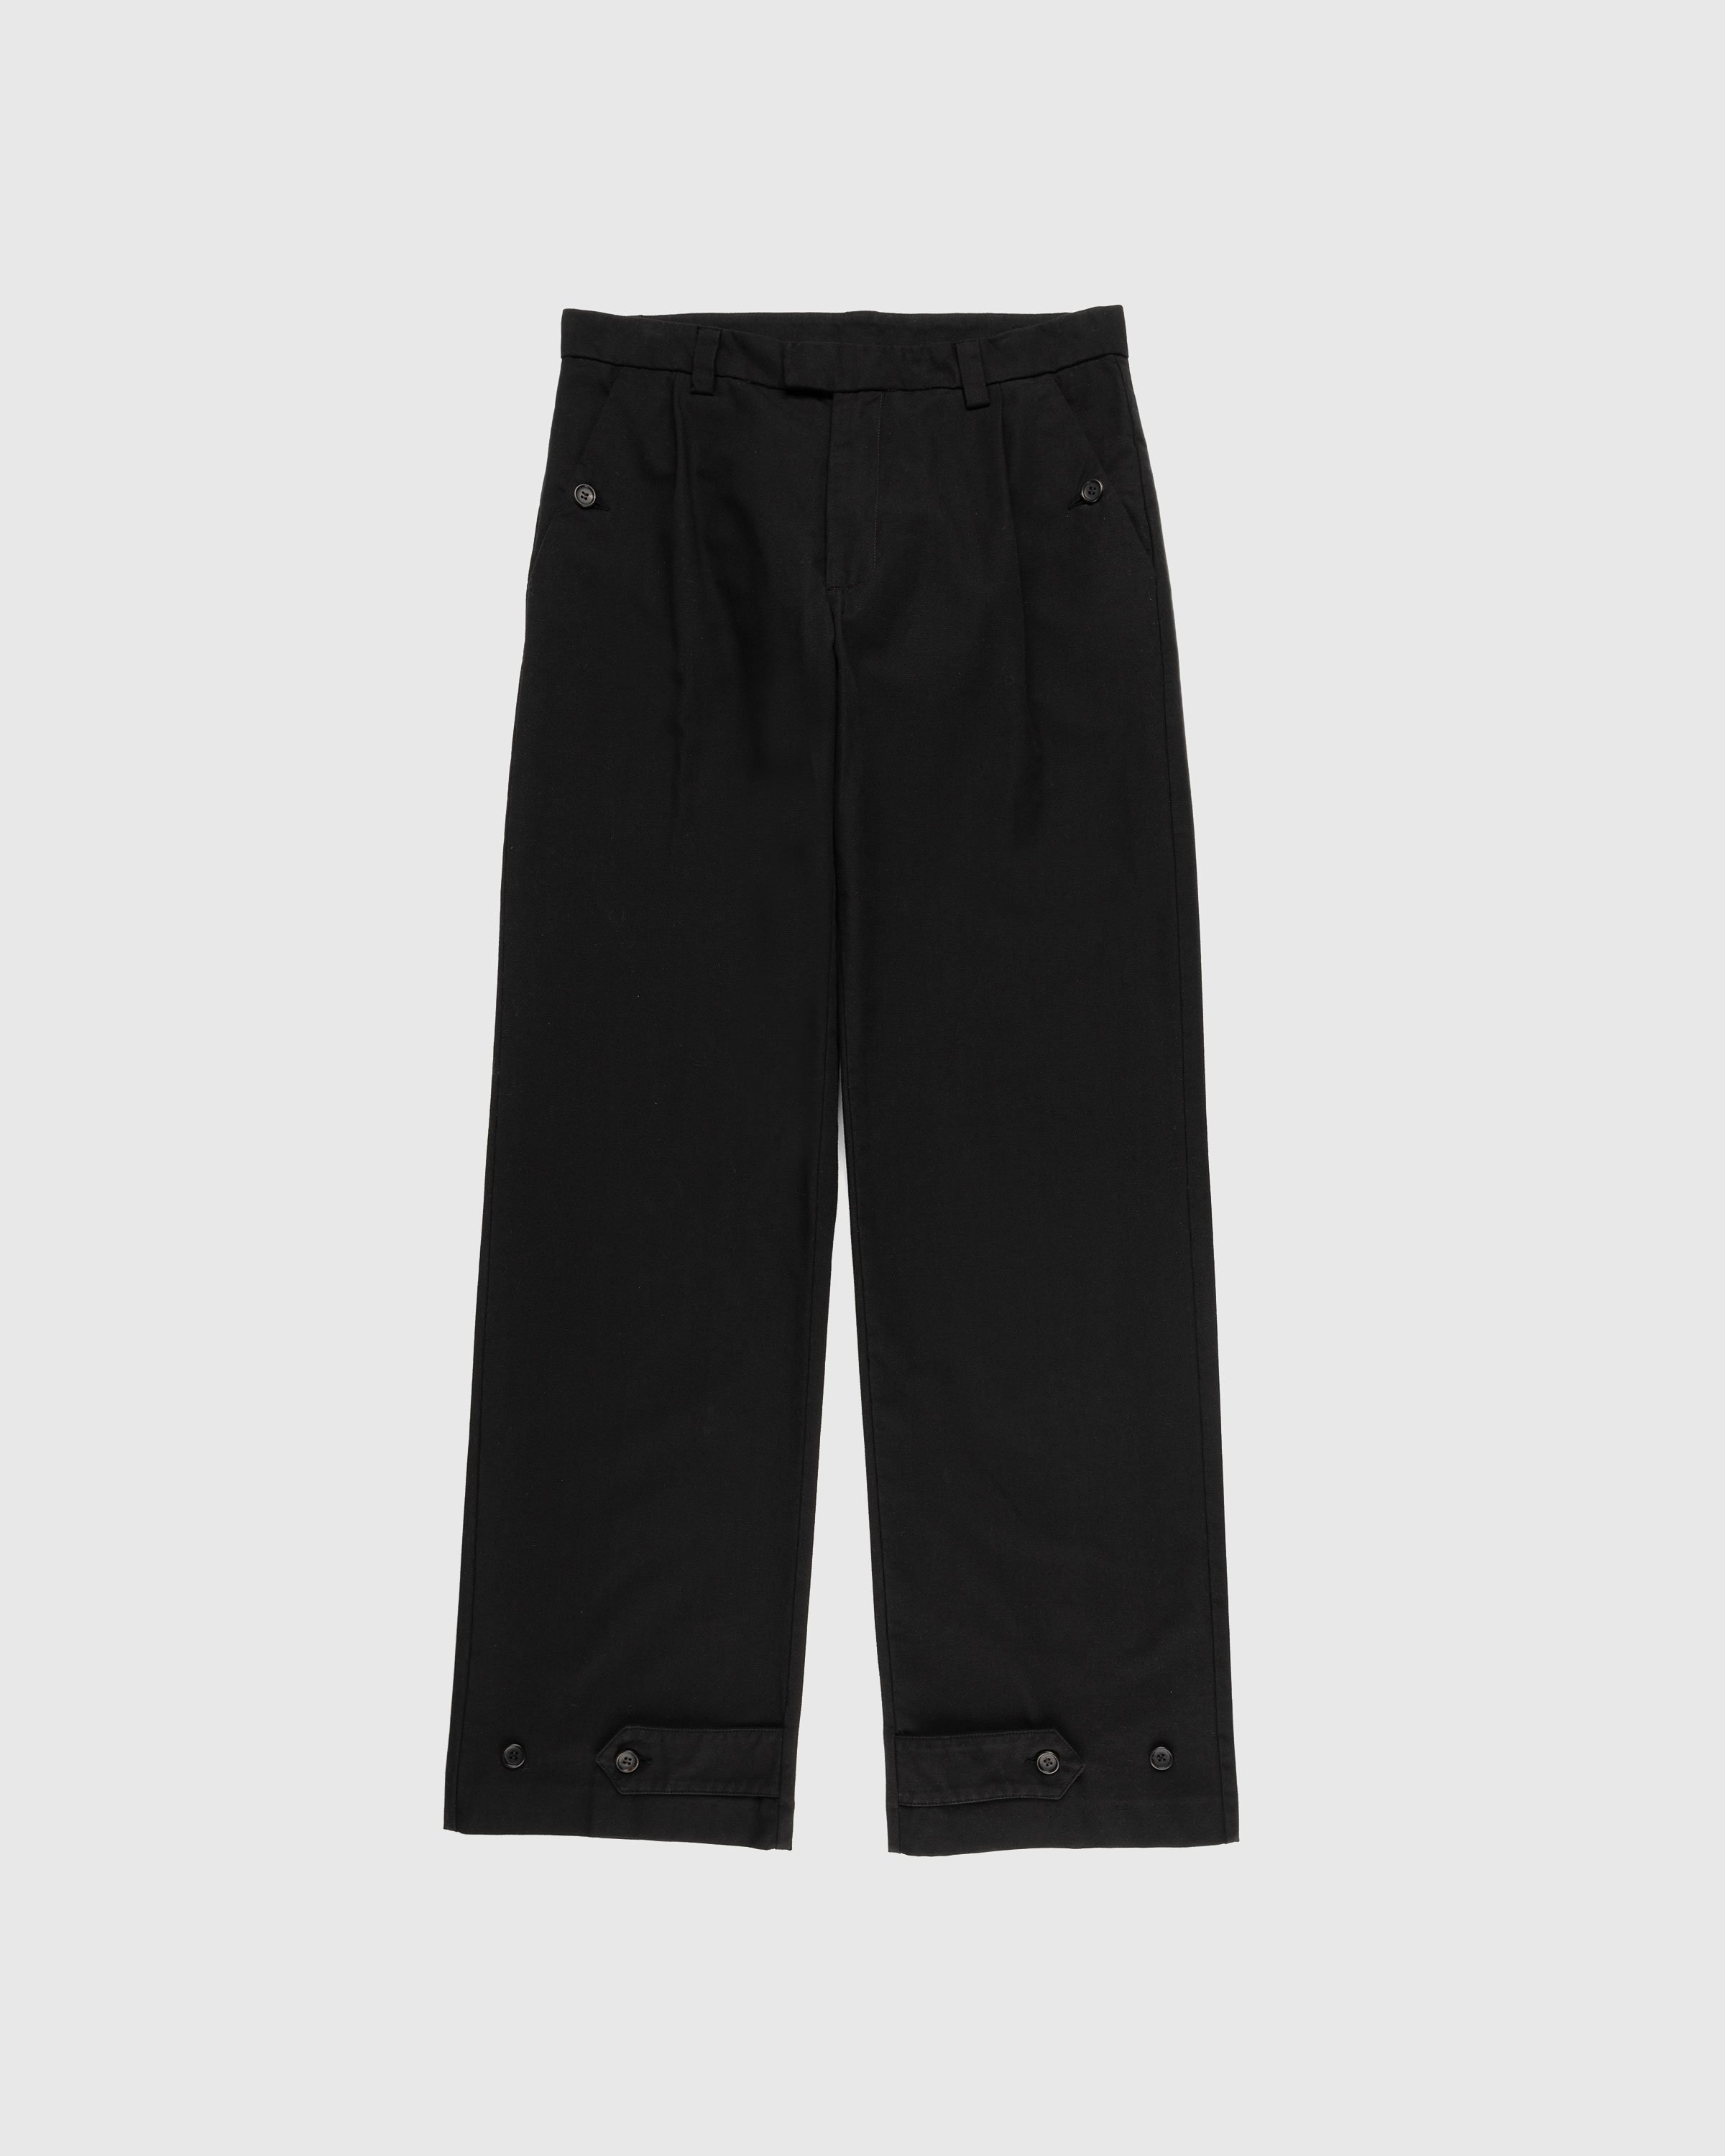 Winnie New York - Bottom Closure Trouser Black - Clothing - Black - Image 1